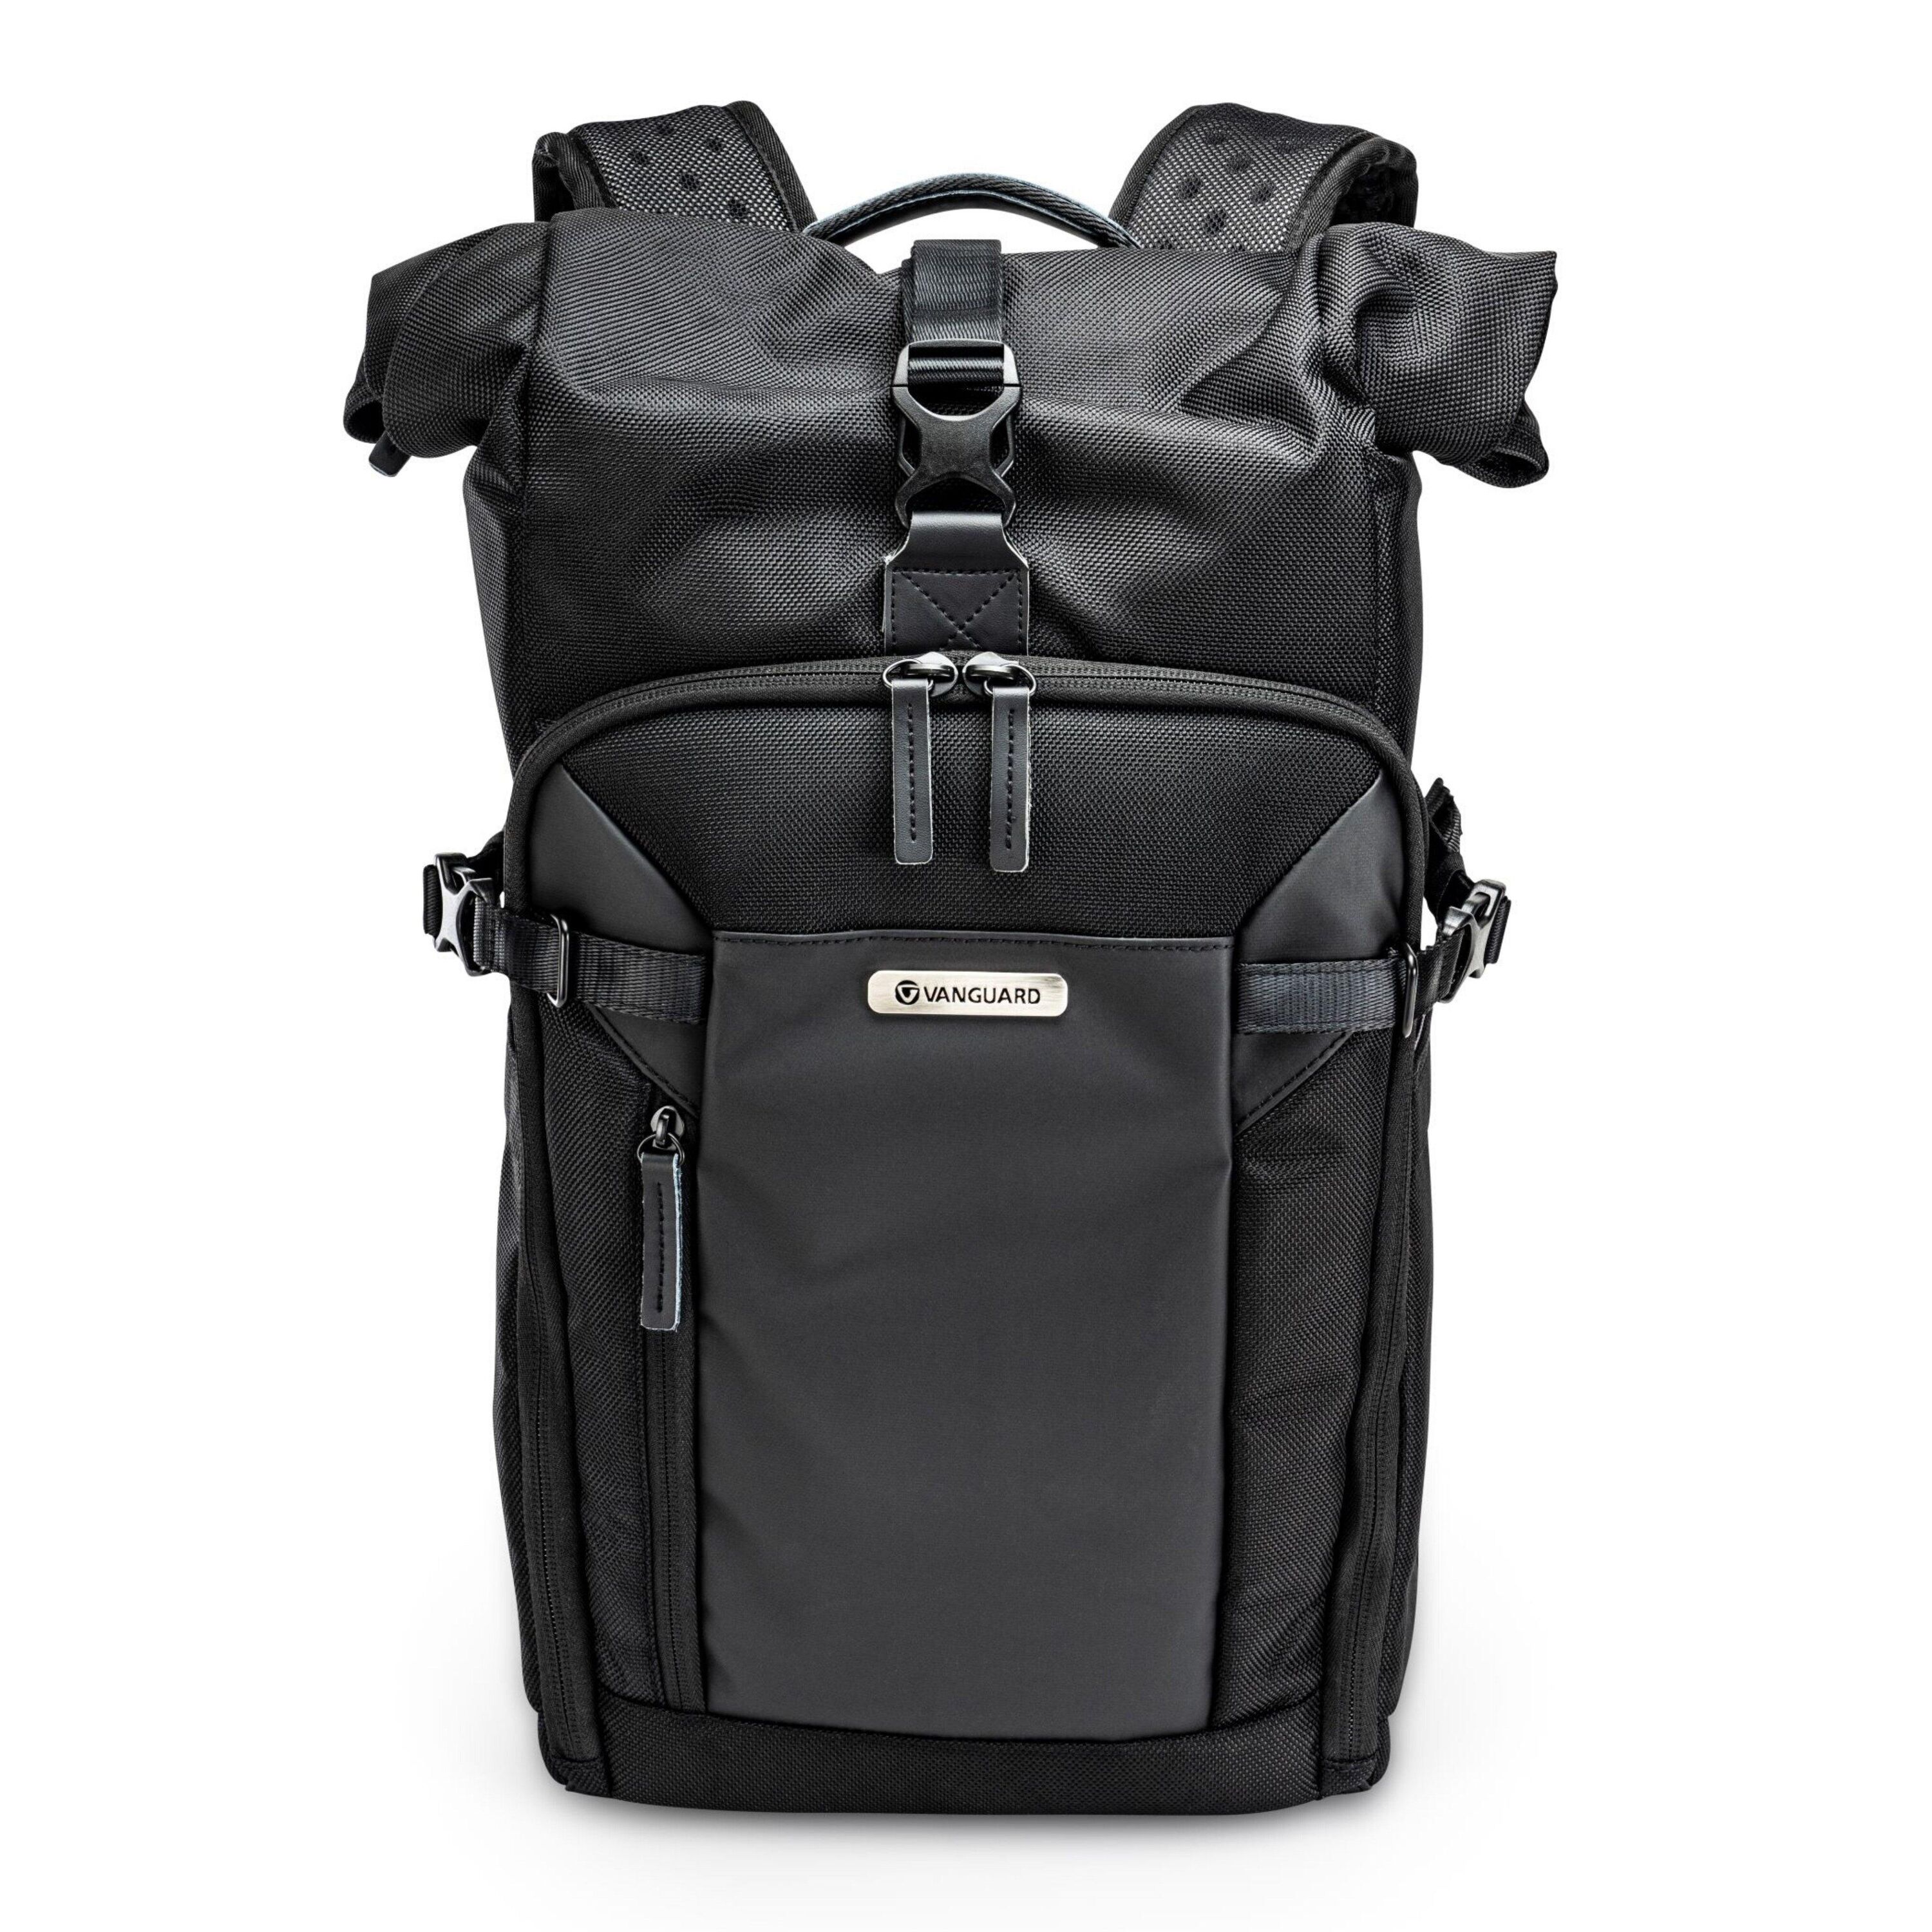 VANGUARD VEO Select 43RB BK - Roll-Top Camera Backpack - Black